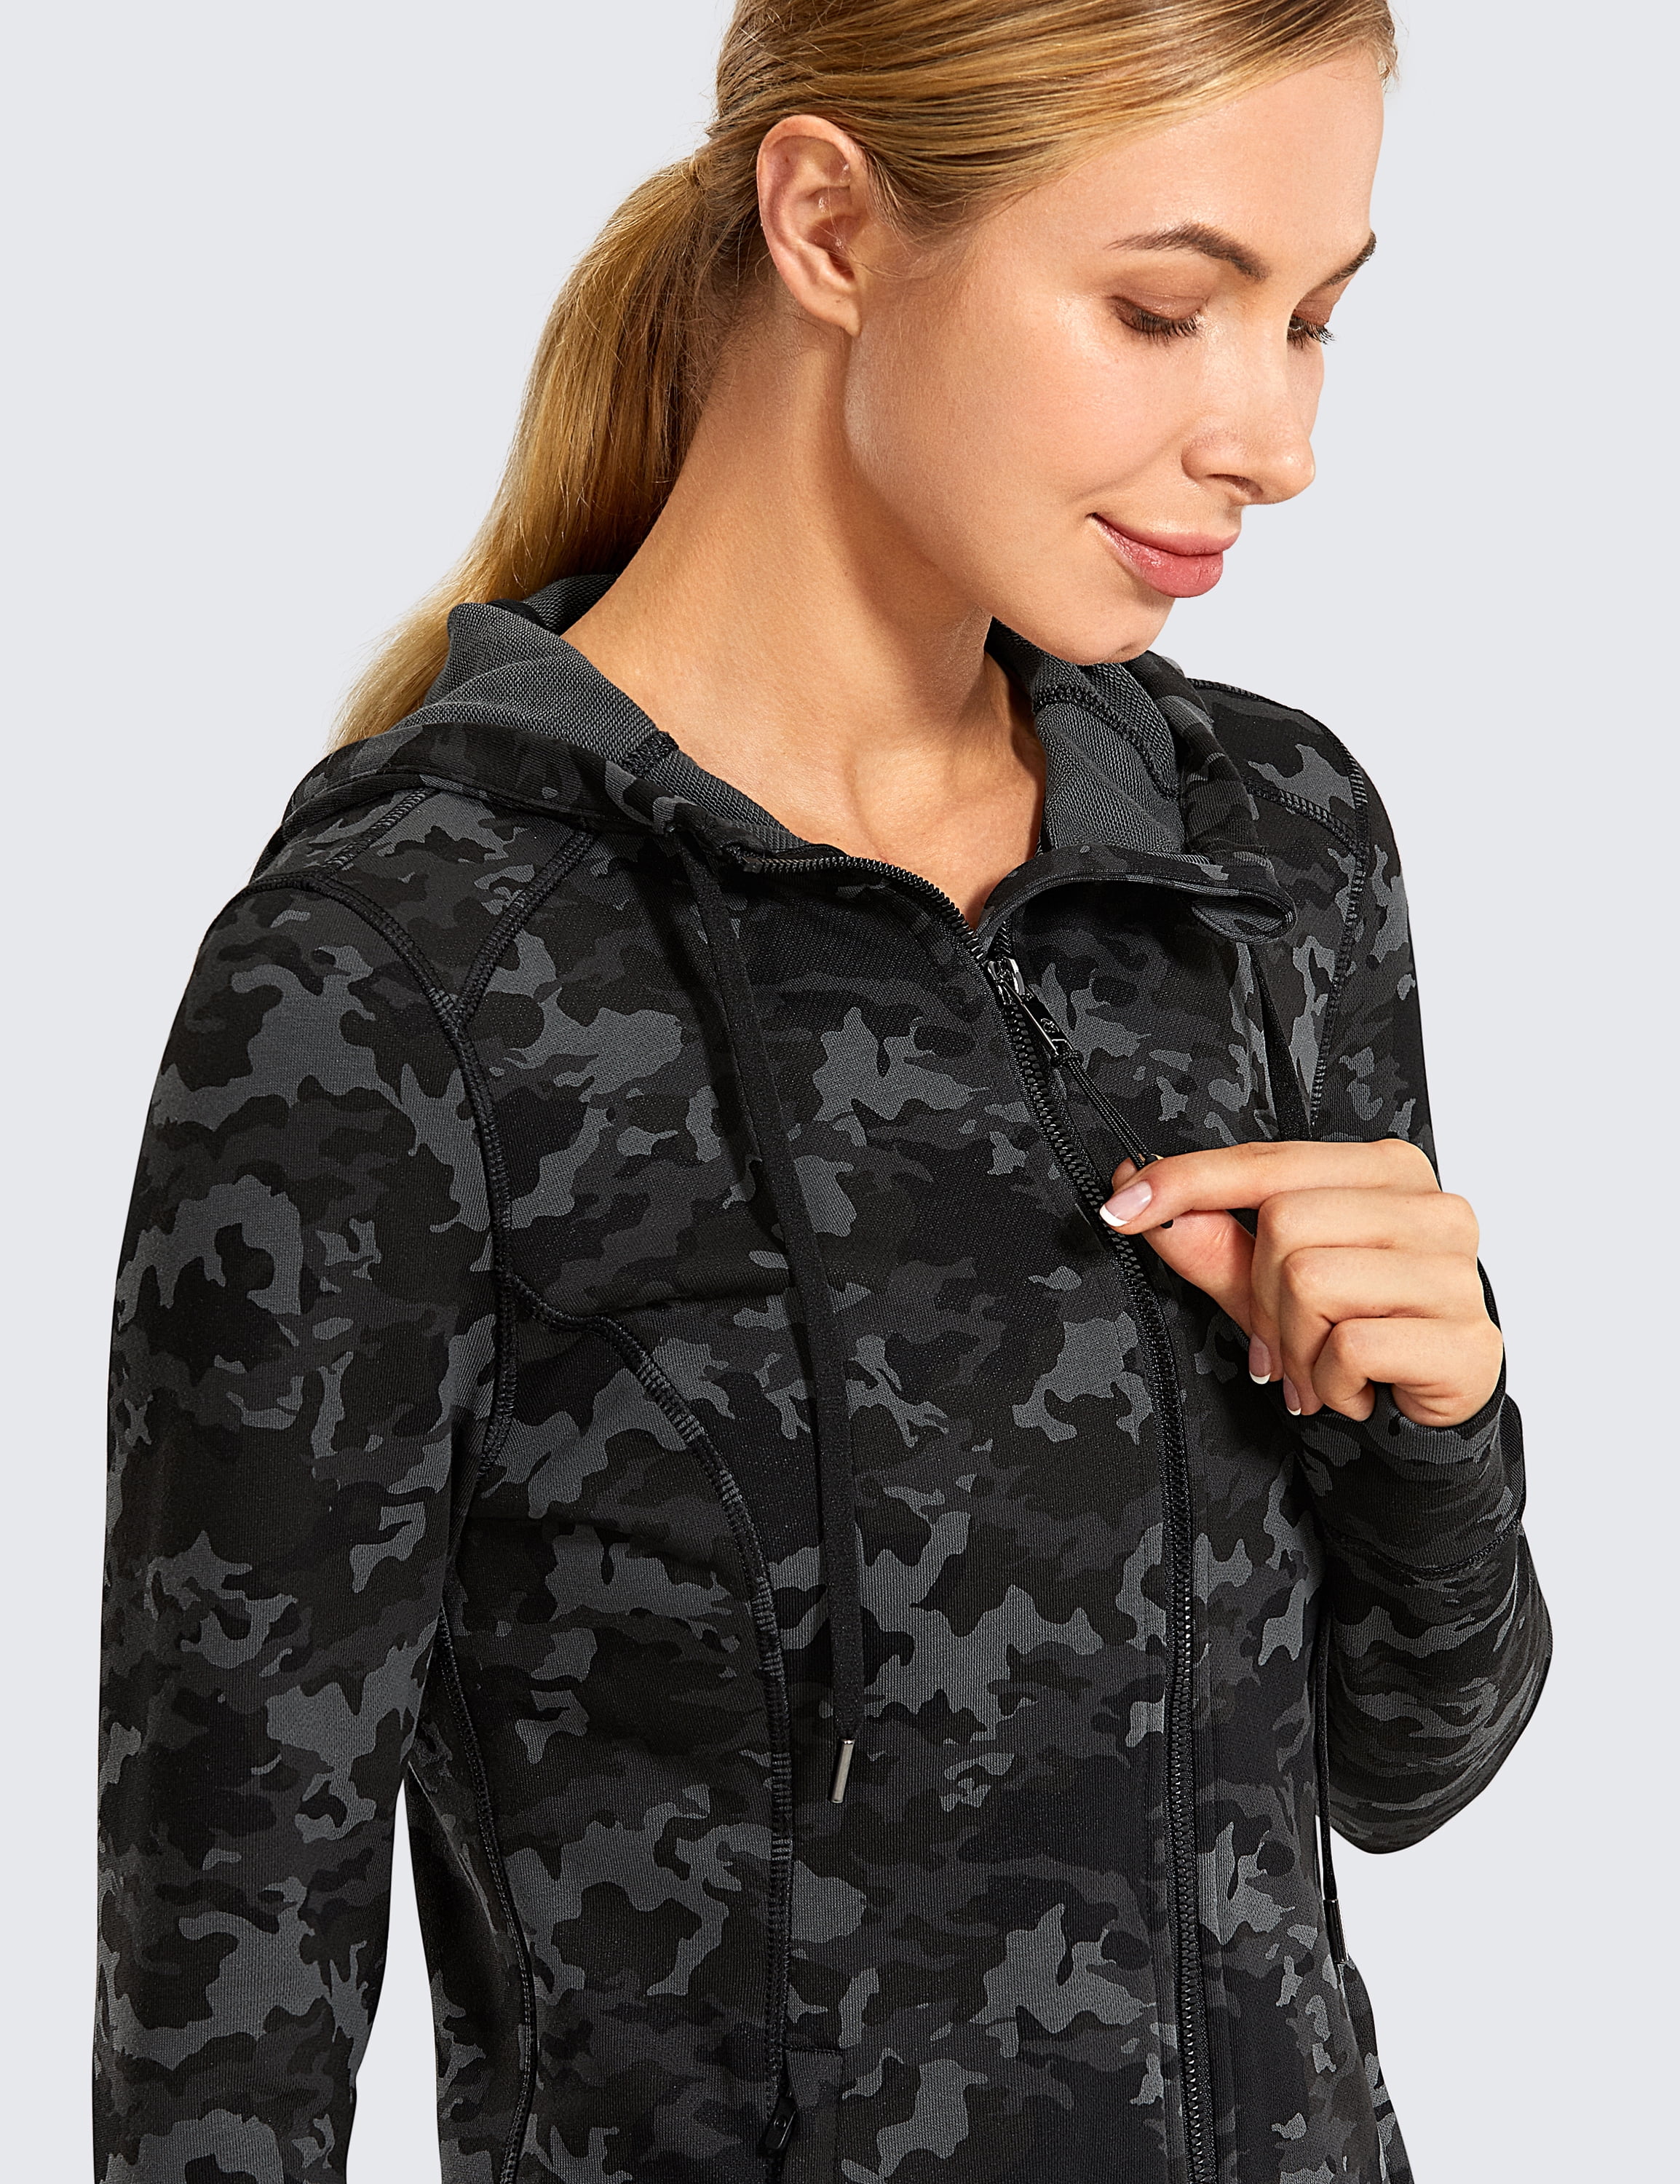 CRZ YOGA Women's Cotton Hoodies Full Zip Running Track Jacket Sweatshirt with Thumbholes 